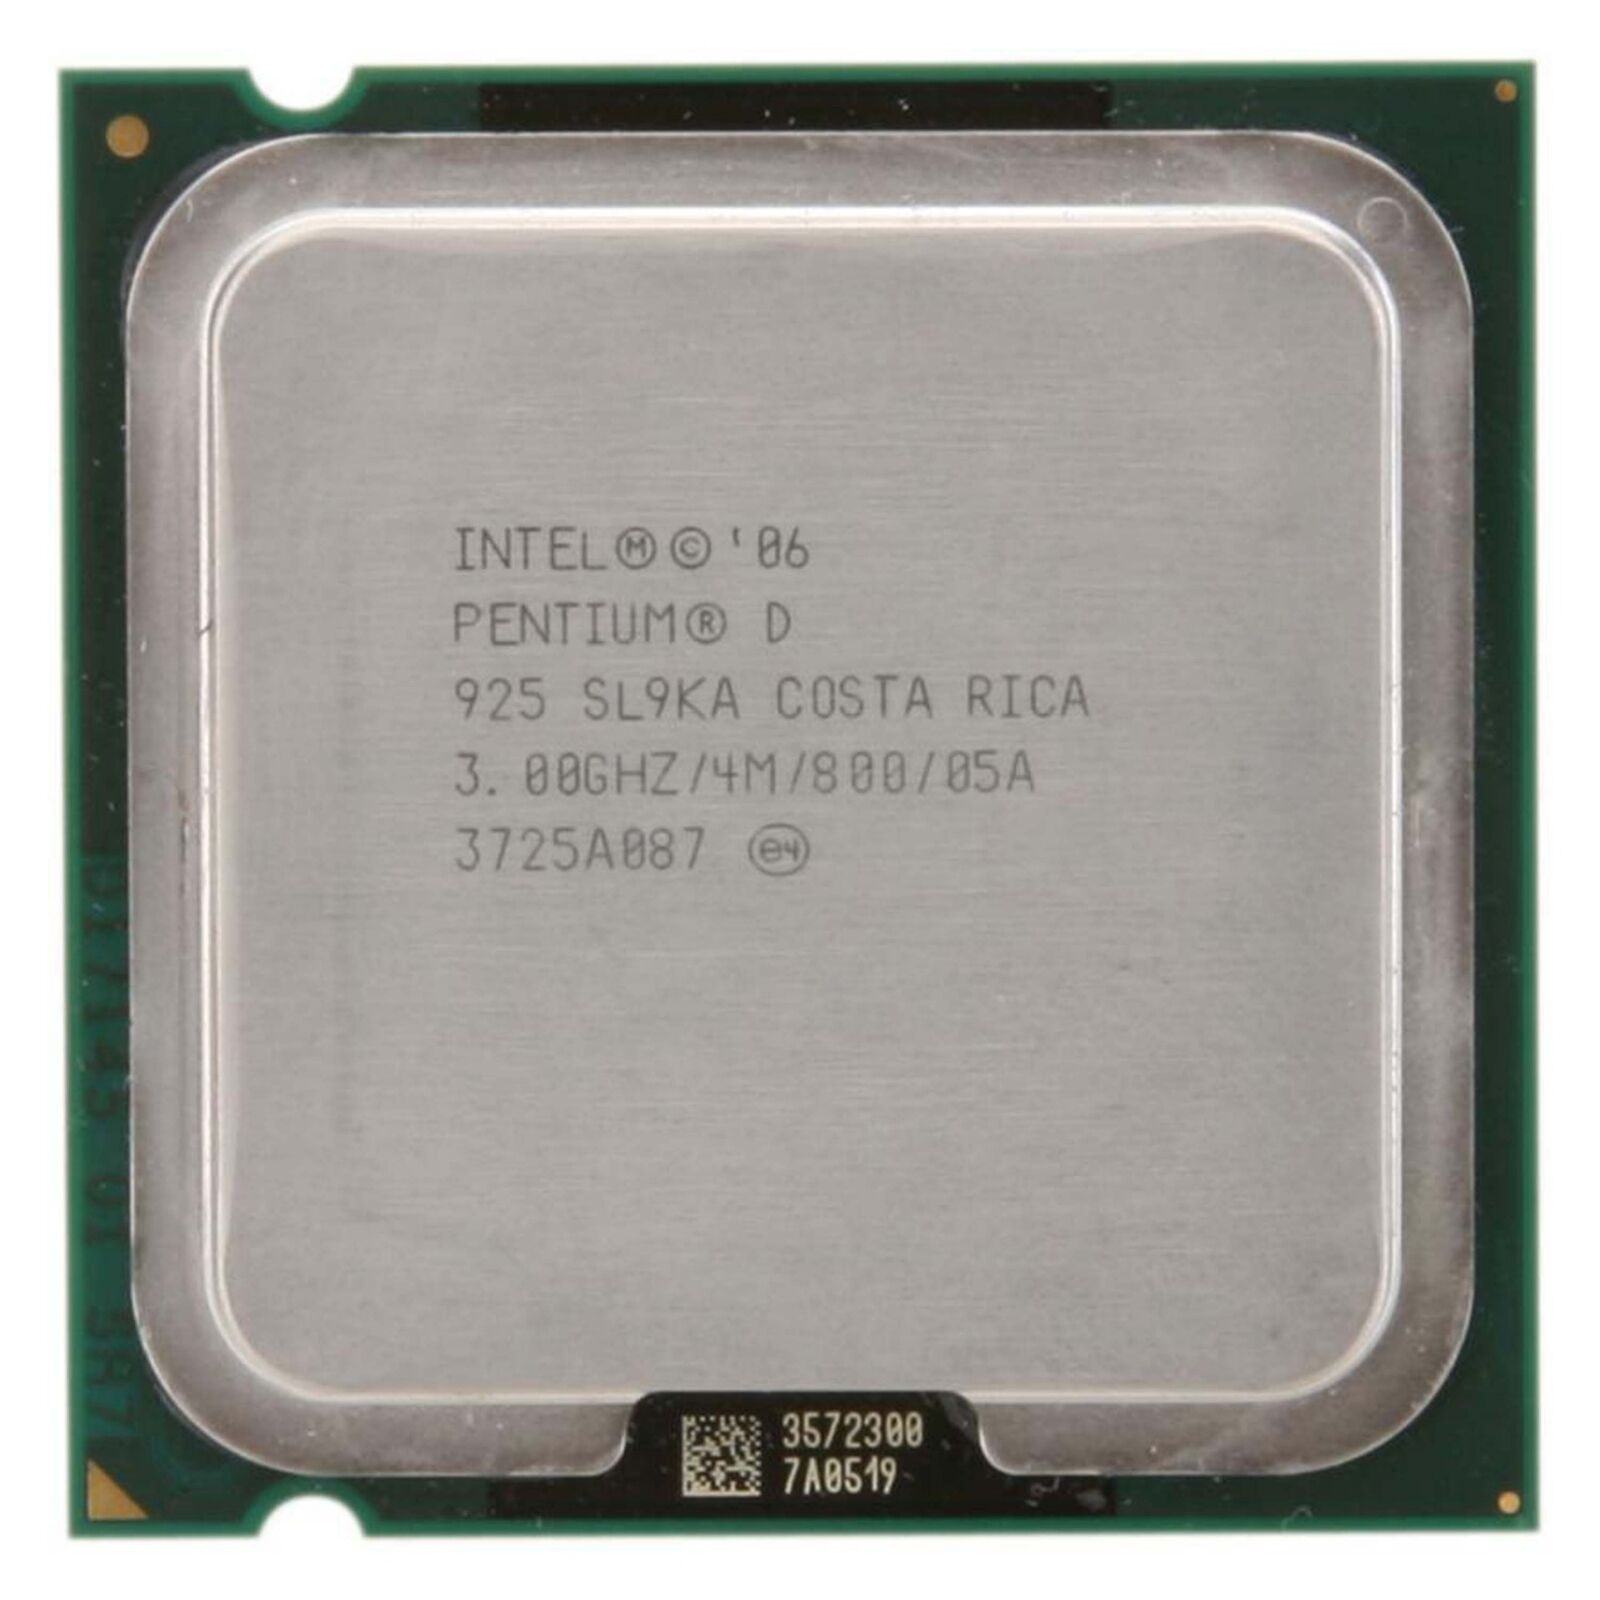 PC CPU Intel Pentium D 925 3.00GHZ SL9KA LGA775 Processor Socket Computer